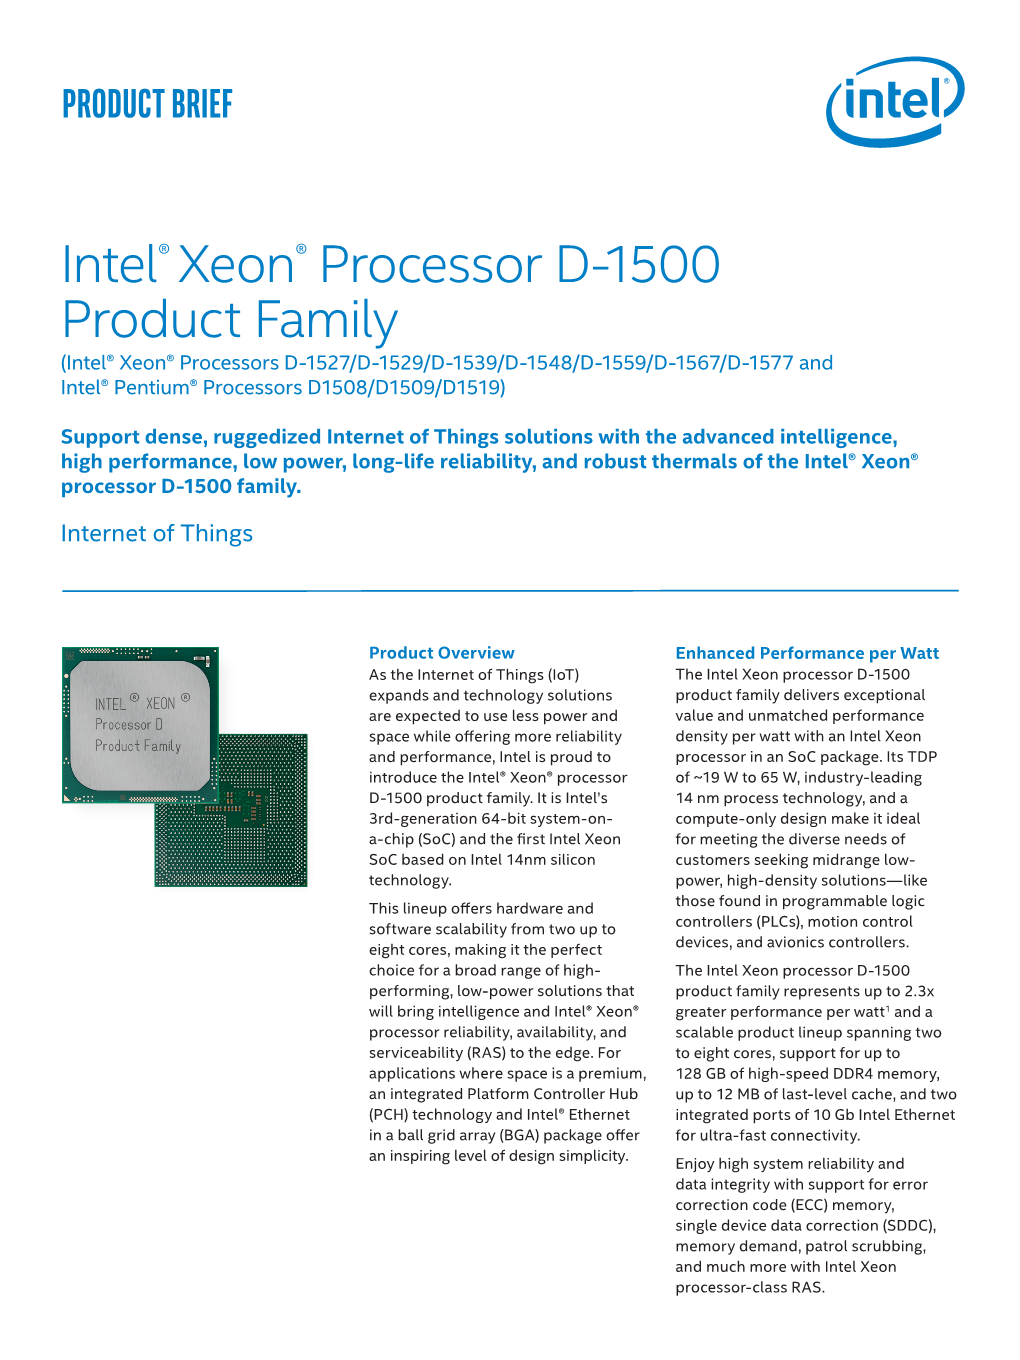 Intel® Xeon® Processor D-1500 Product Family